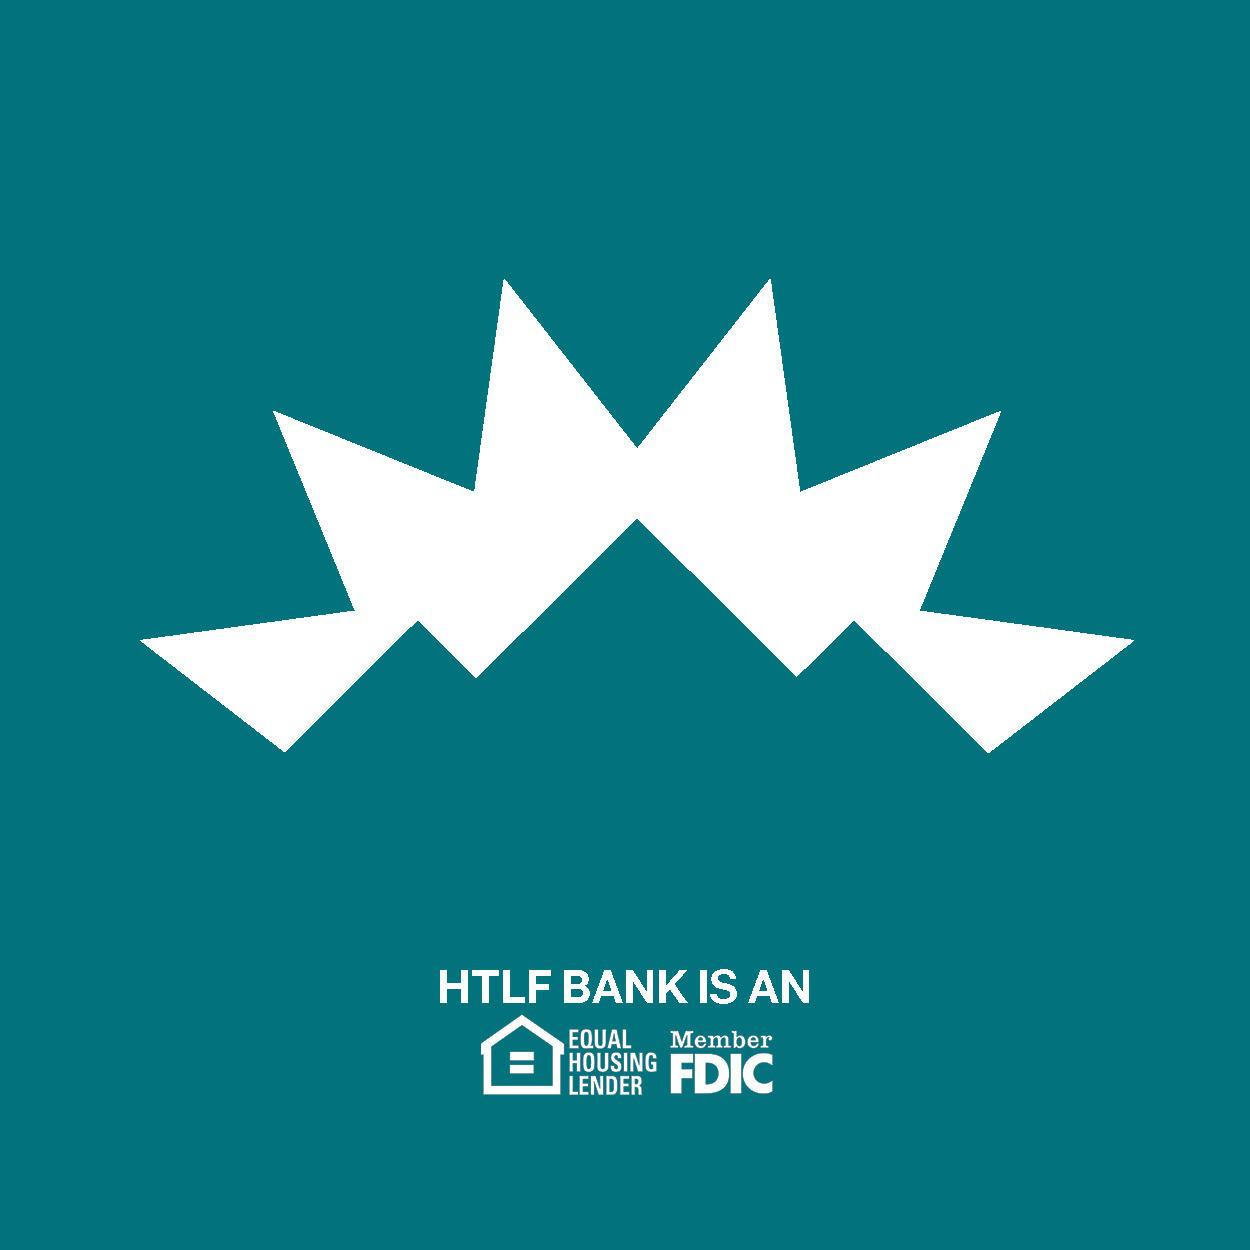 New Mexico Bank & Trust, a division of HTLF Bank - Santa Rosa, NM 88435 - (575)472-6000 | ShowMeLocal.com